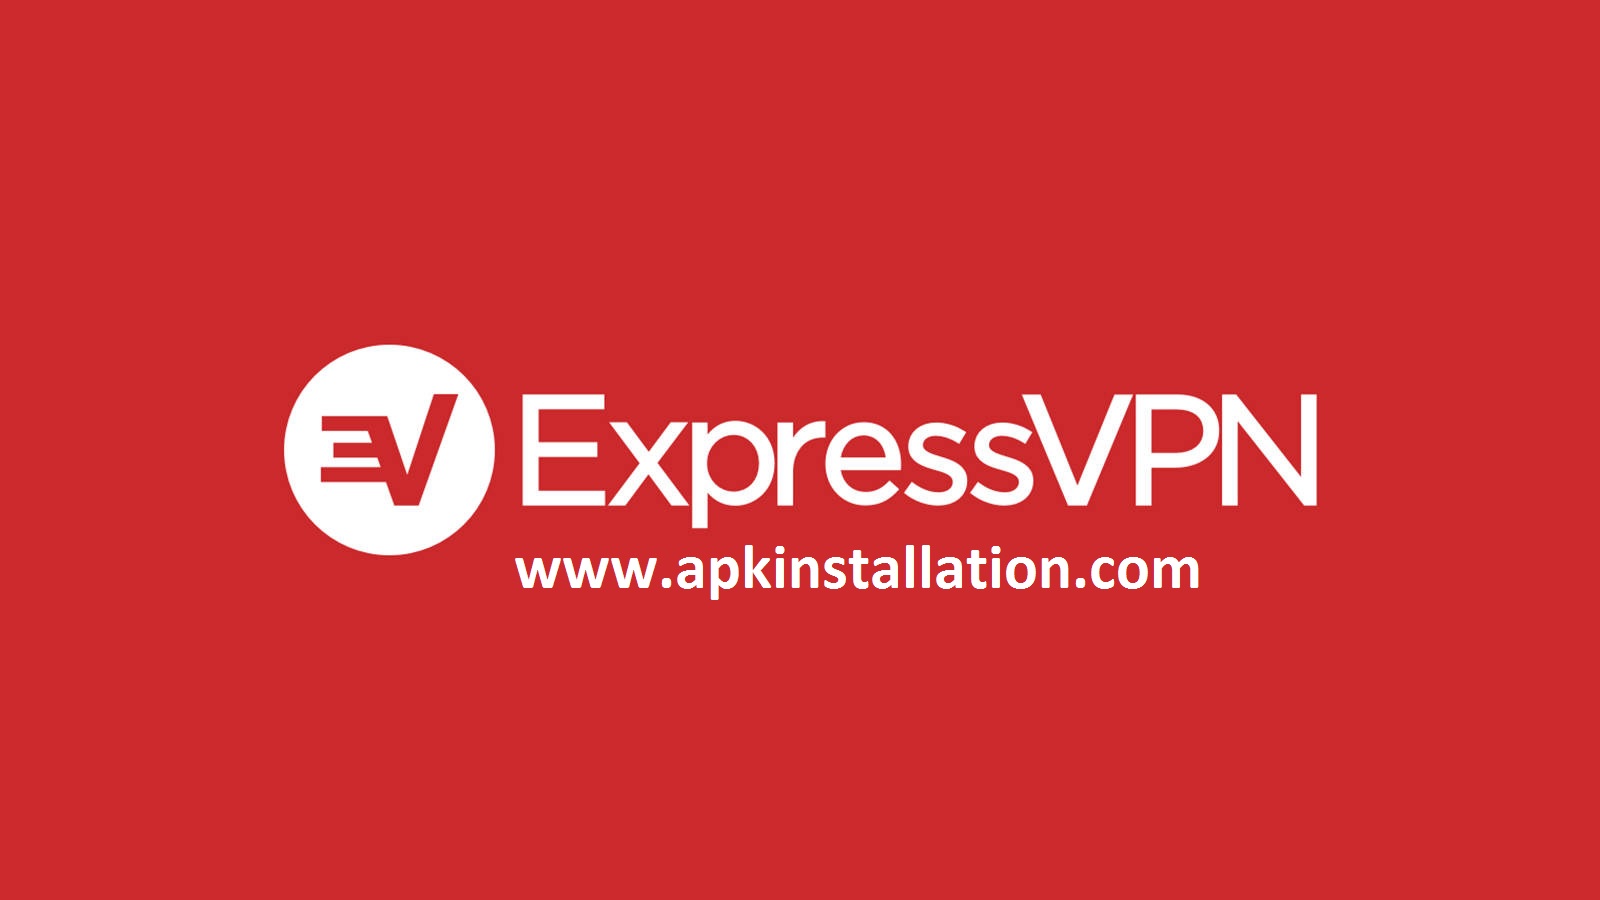 Download Express VPN Mod APK For Android - Apk Installation